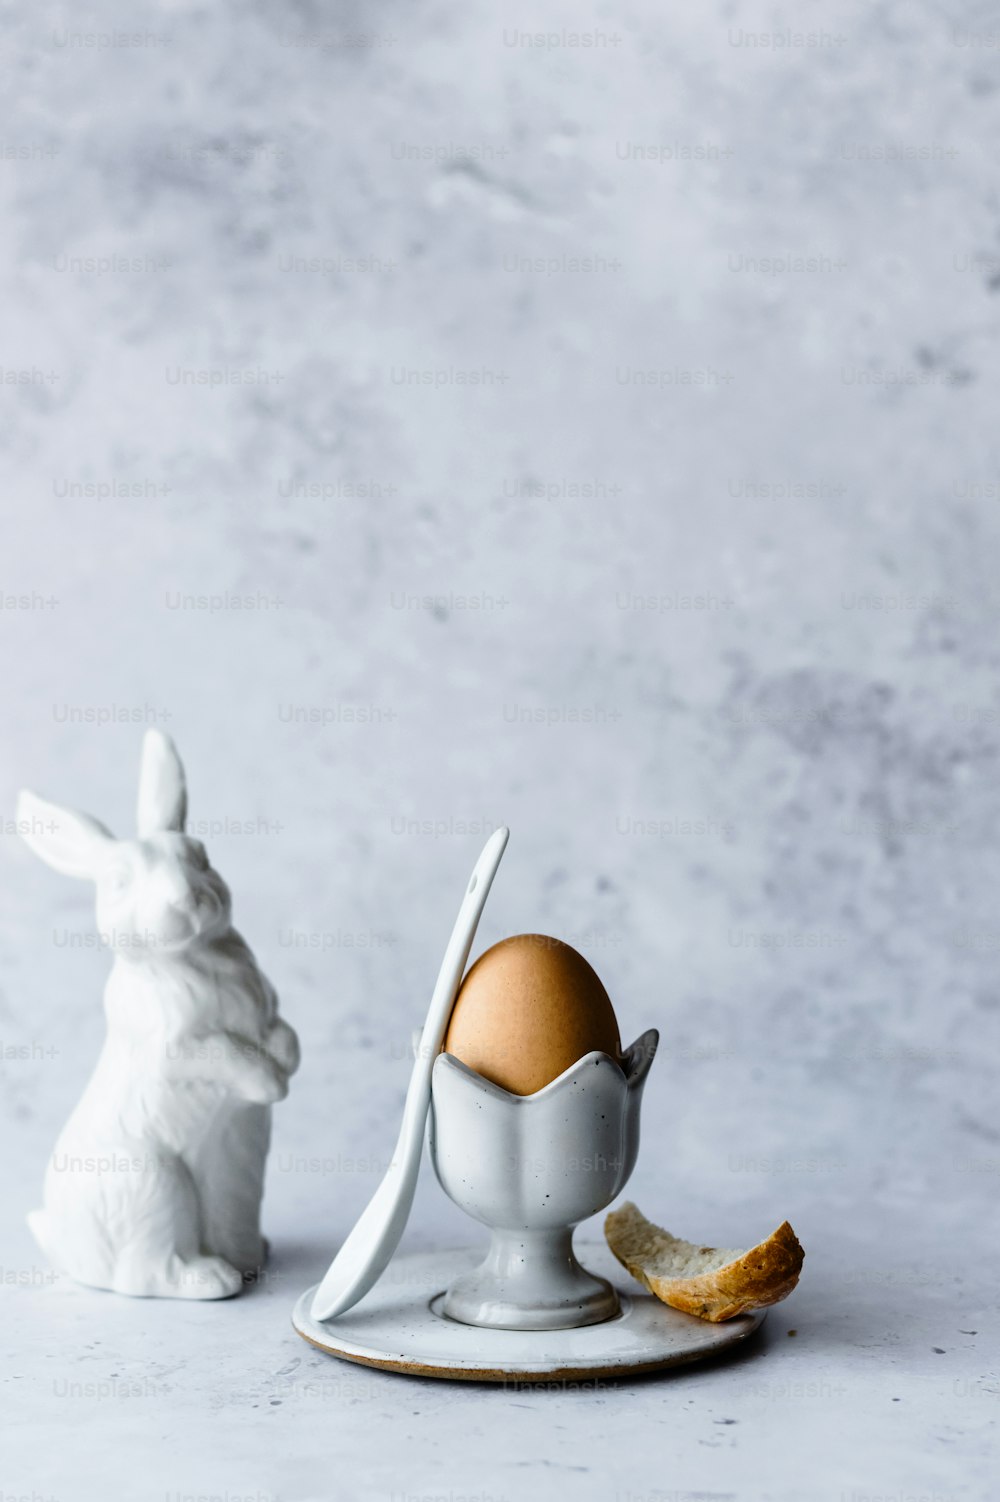 a white bunny figurine next to a broken egg